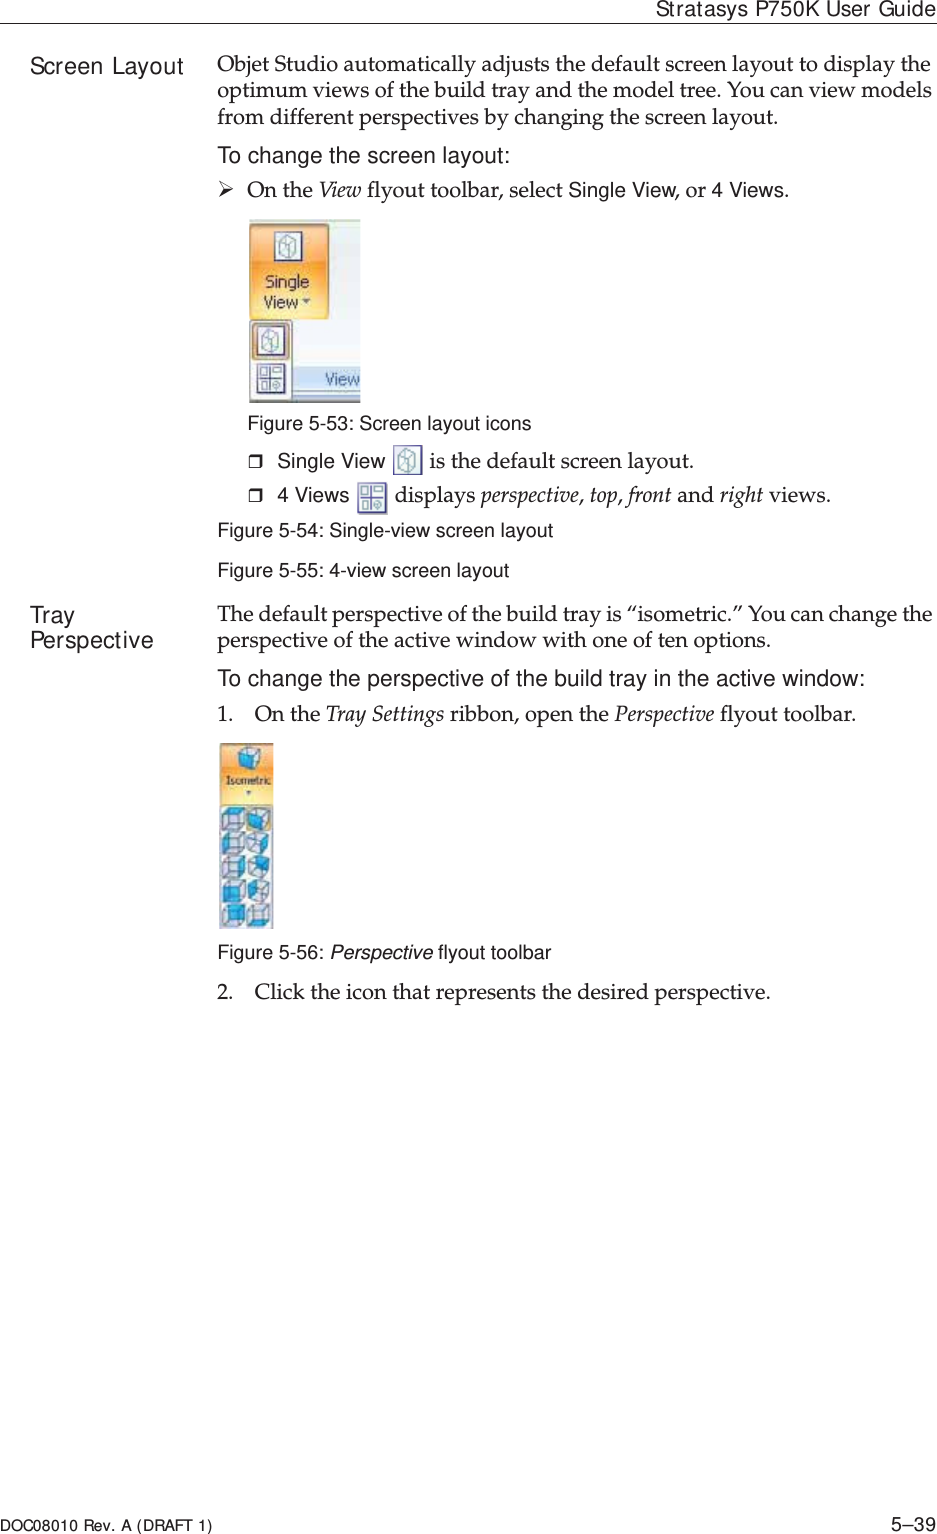 DOC08010 Rev. A (DRAFT 1) 5–39Stratasys P750K User GuideScreen Layout ObjetȱStudioȱautomaticallyȱadjustsȱtheȱdefaultȱscreenȱlayoutȱtoȱdisplayȱtheȱoptimumȱviewsȱofȱtheȱbuildȱtrayȱandȱtheȱmodelȱtree.ȱYouȱcanȱviewȱmodelsȱfromȱdifferentȱperspectivesȱbyȱchangingȱtheȱscreenȱlayout.To change the screen layout:¾OnȱtheȱViewȱflyoutȱtoolbar,ȱselectȱSingle View,ȱorȱ4 Views.Figure 5-53: Screen layout iconsSingle View  ȱisȱtheȱdefaultȱscreenȱlayout.4 Viewsȱȱdisplaysȱperspective,ȱtop,ȱfrontȱandȱrightȱviews.Figure 5-54: Single-view screen layoutFigure 5-55: 4-view screen layoutTray Perspective Theȱdefaultȱperspectiveȱofȱtheȱbuildȱtrayȱisȱ“isometric.”ȱYouȱcanȱchangeȱtheȱperspectiveȱofȱtheȱactiveȱwindowȱwithȱoneȱofȱtenȱoptions.To change the perspective of the build tray in the active window:1. OnȱtheȱTrayȱSettingsȱribbon,ȱopenȱtheȱPerspectiveȱflyoutȱtoolbar.Figure 5-56: Perspective flyout toolbar2. Clickȱtheȱiconȱthatȱrepresentsȱtheȱdesiredȱperspective.